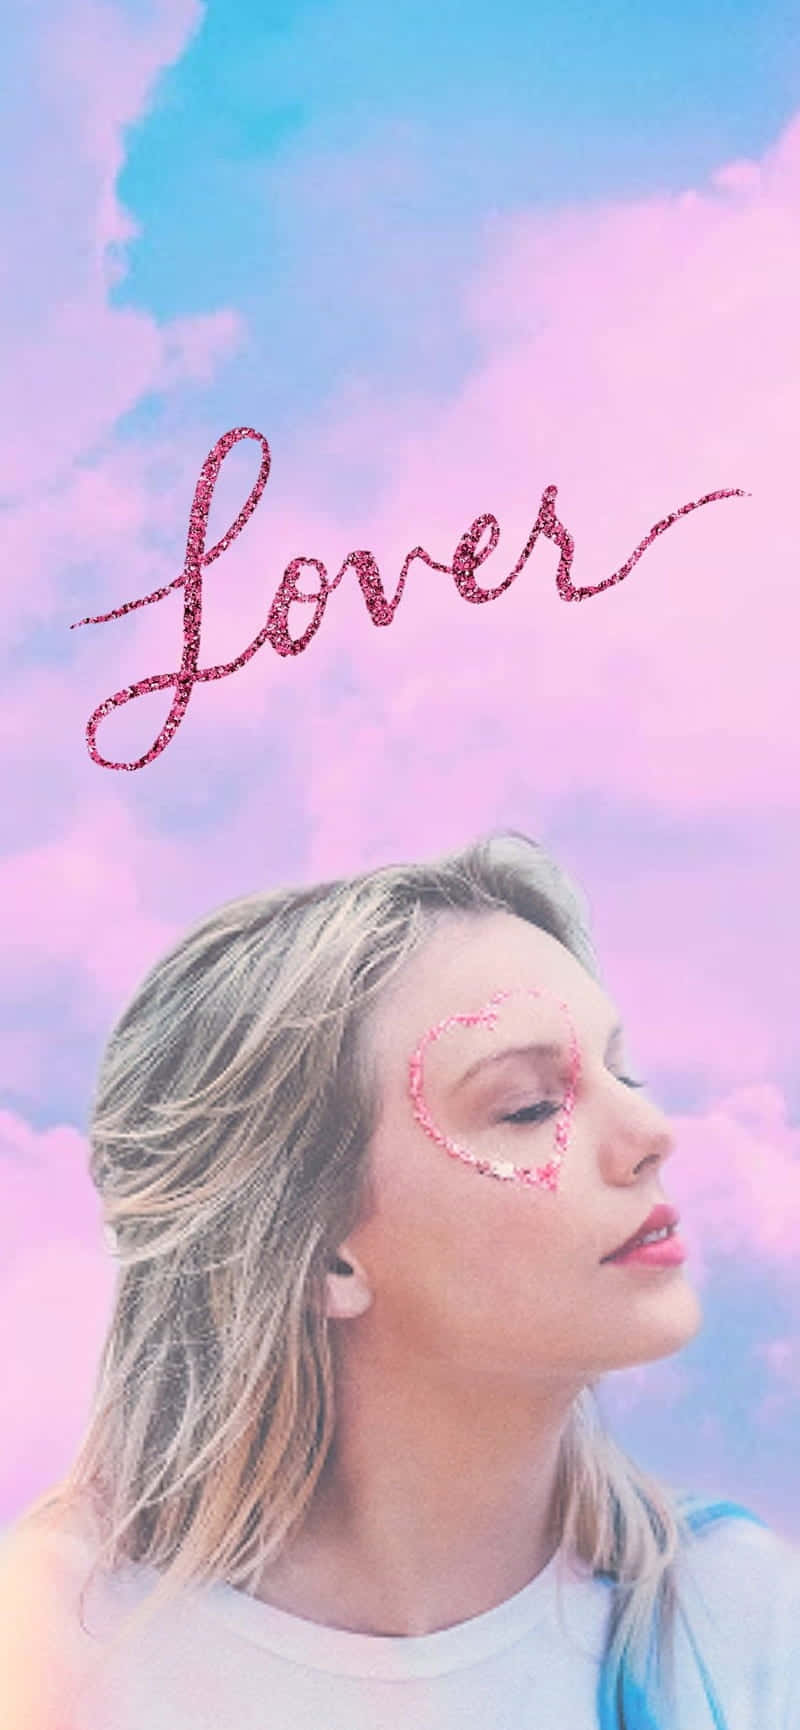 Taylor Swift Lover Album Inspired Image Wallpaper